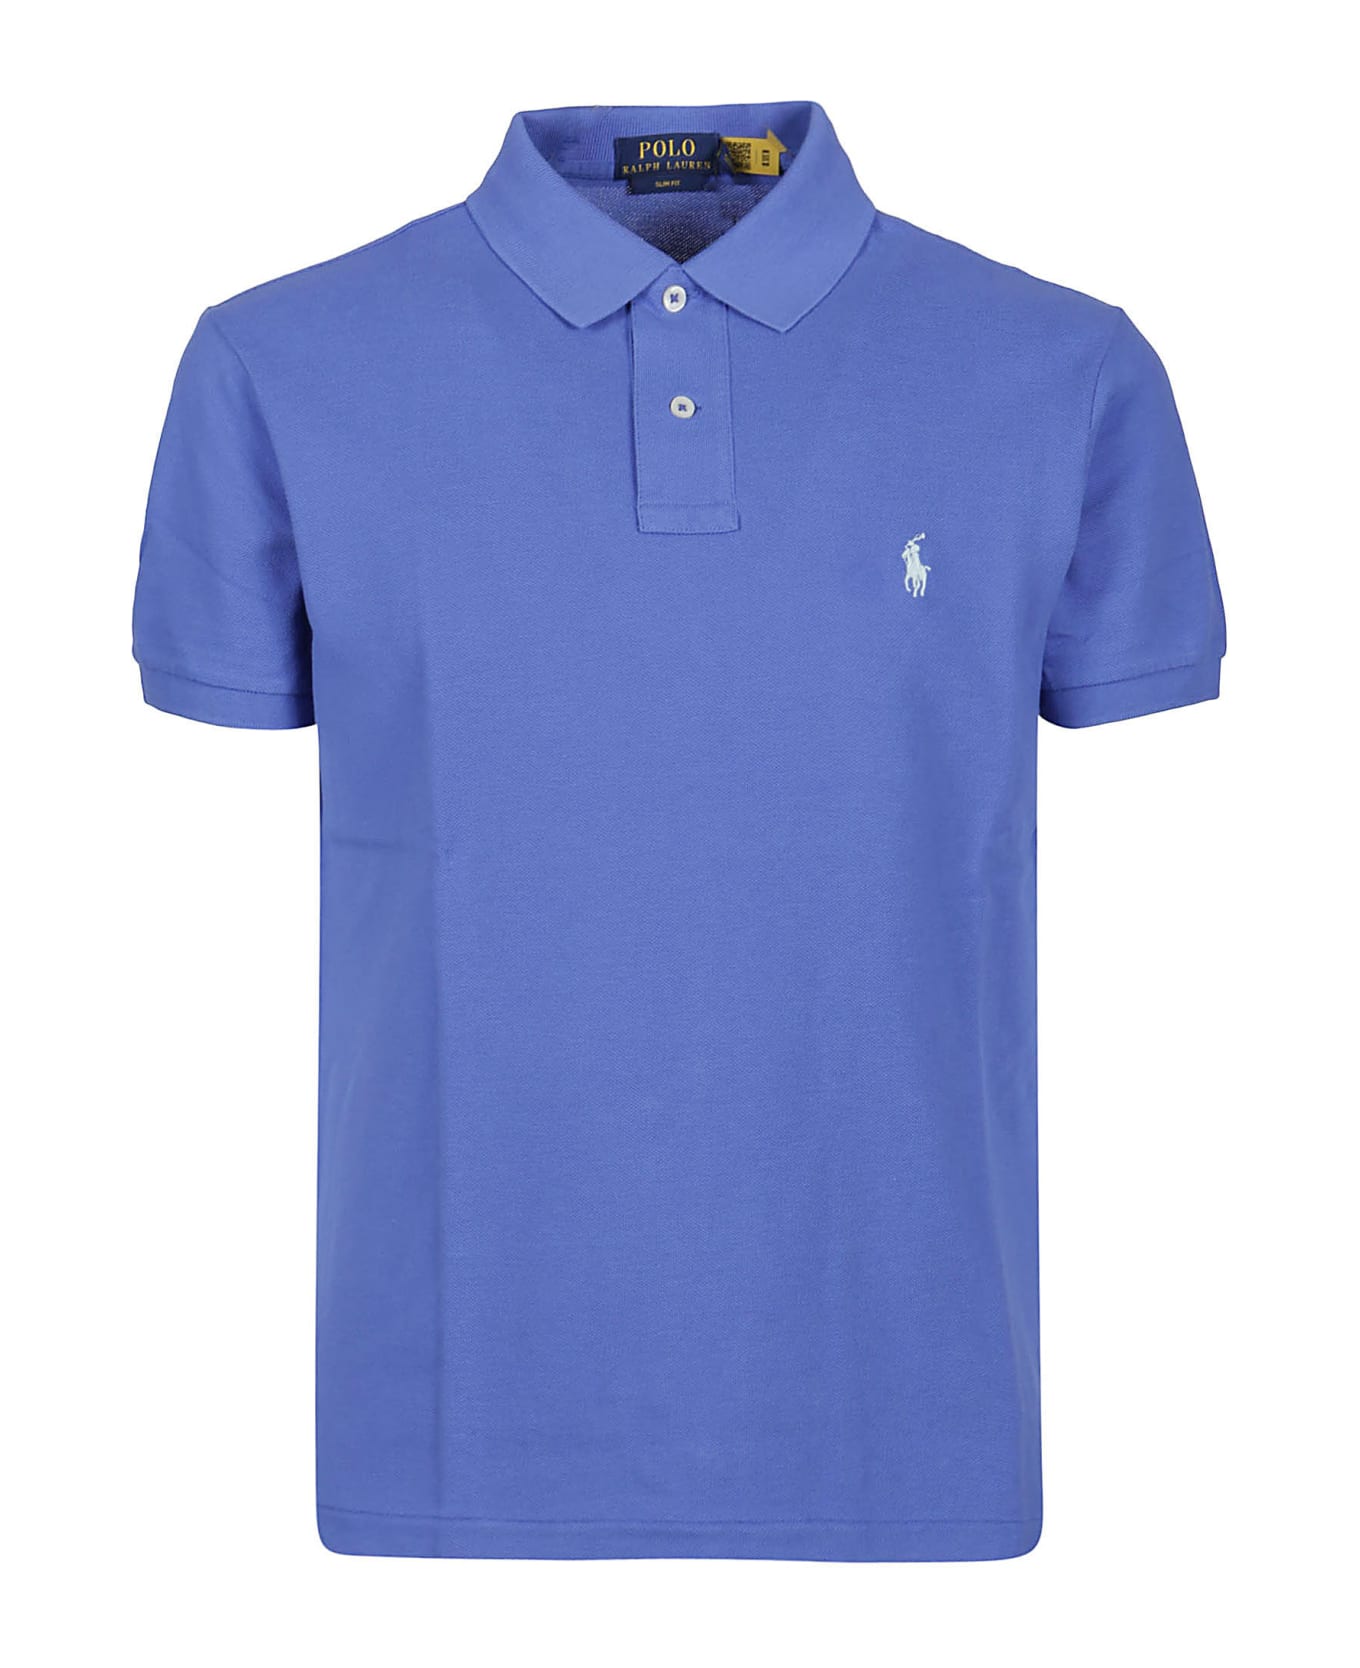 Polo Ralph Lauren Short Sleeve Polo Shirt - Maidstone Blue